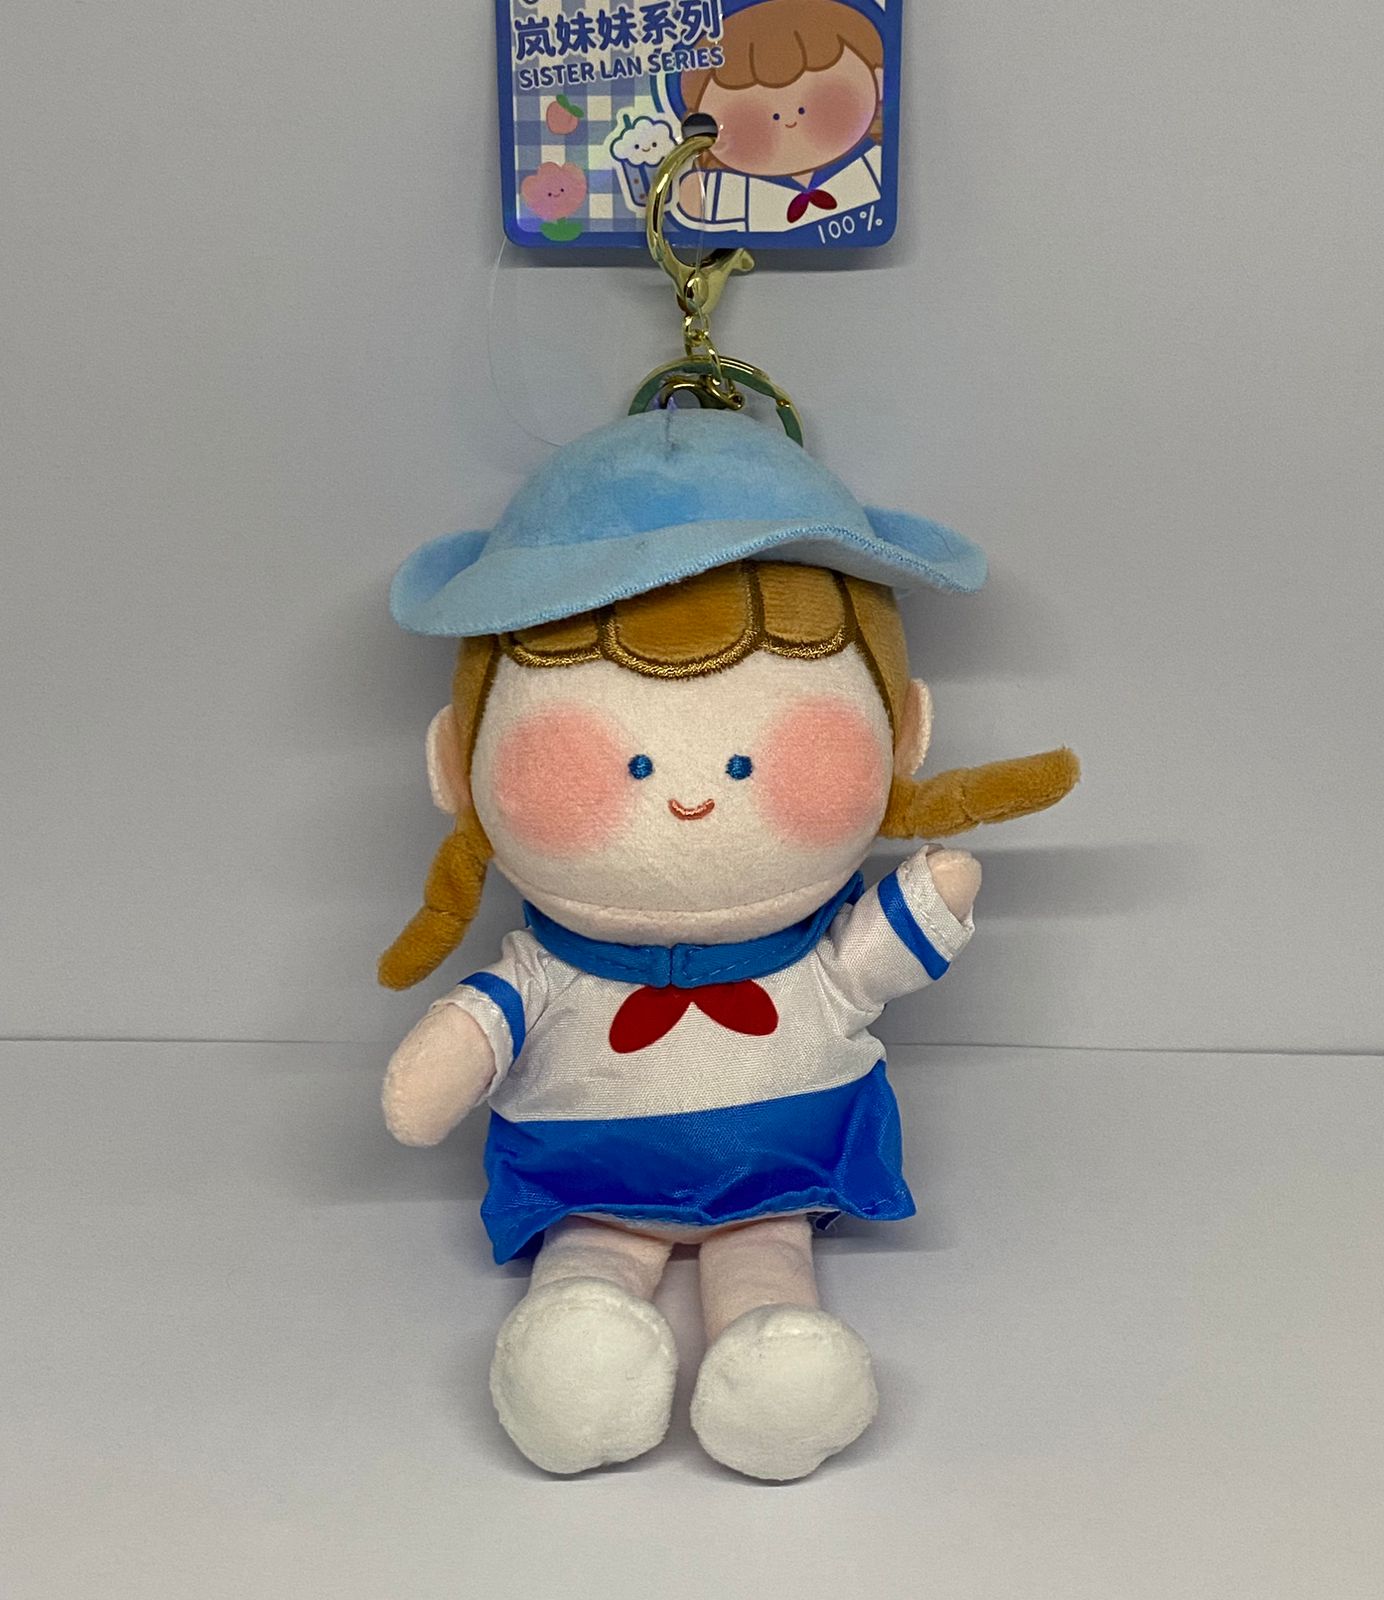 Alice Doll Sister Lan Series - Cheer Up!